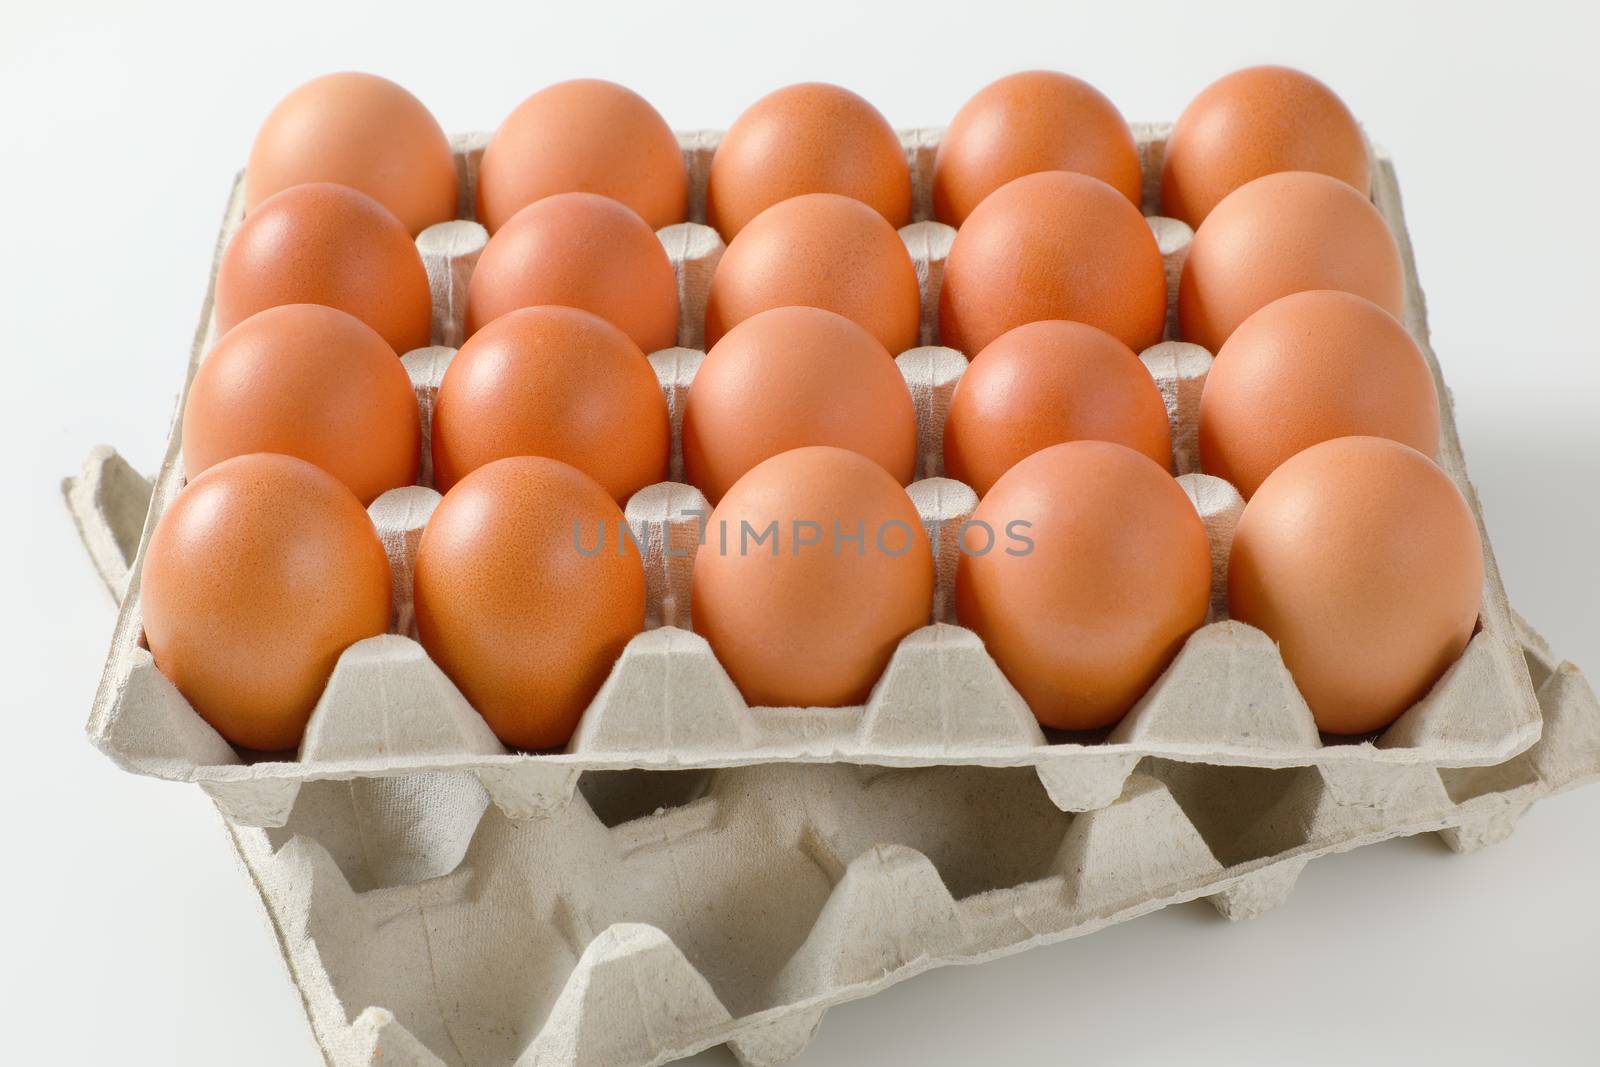 Twenty fresh brown eggs in a paper egg tray